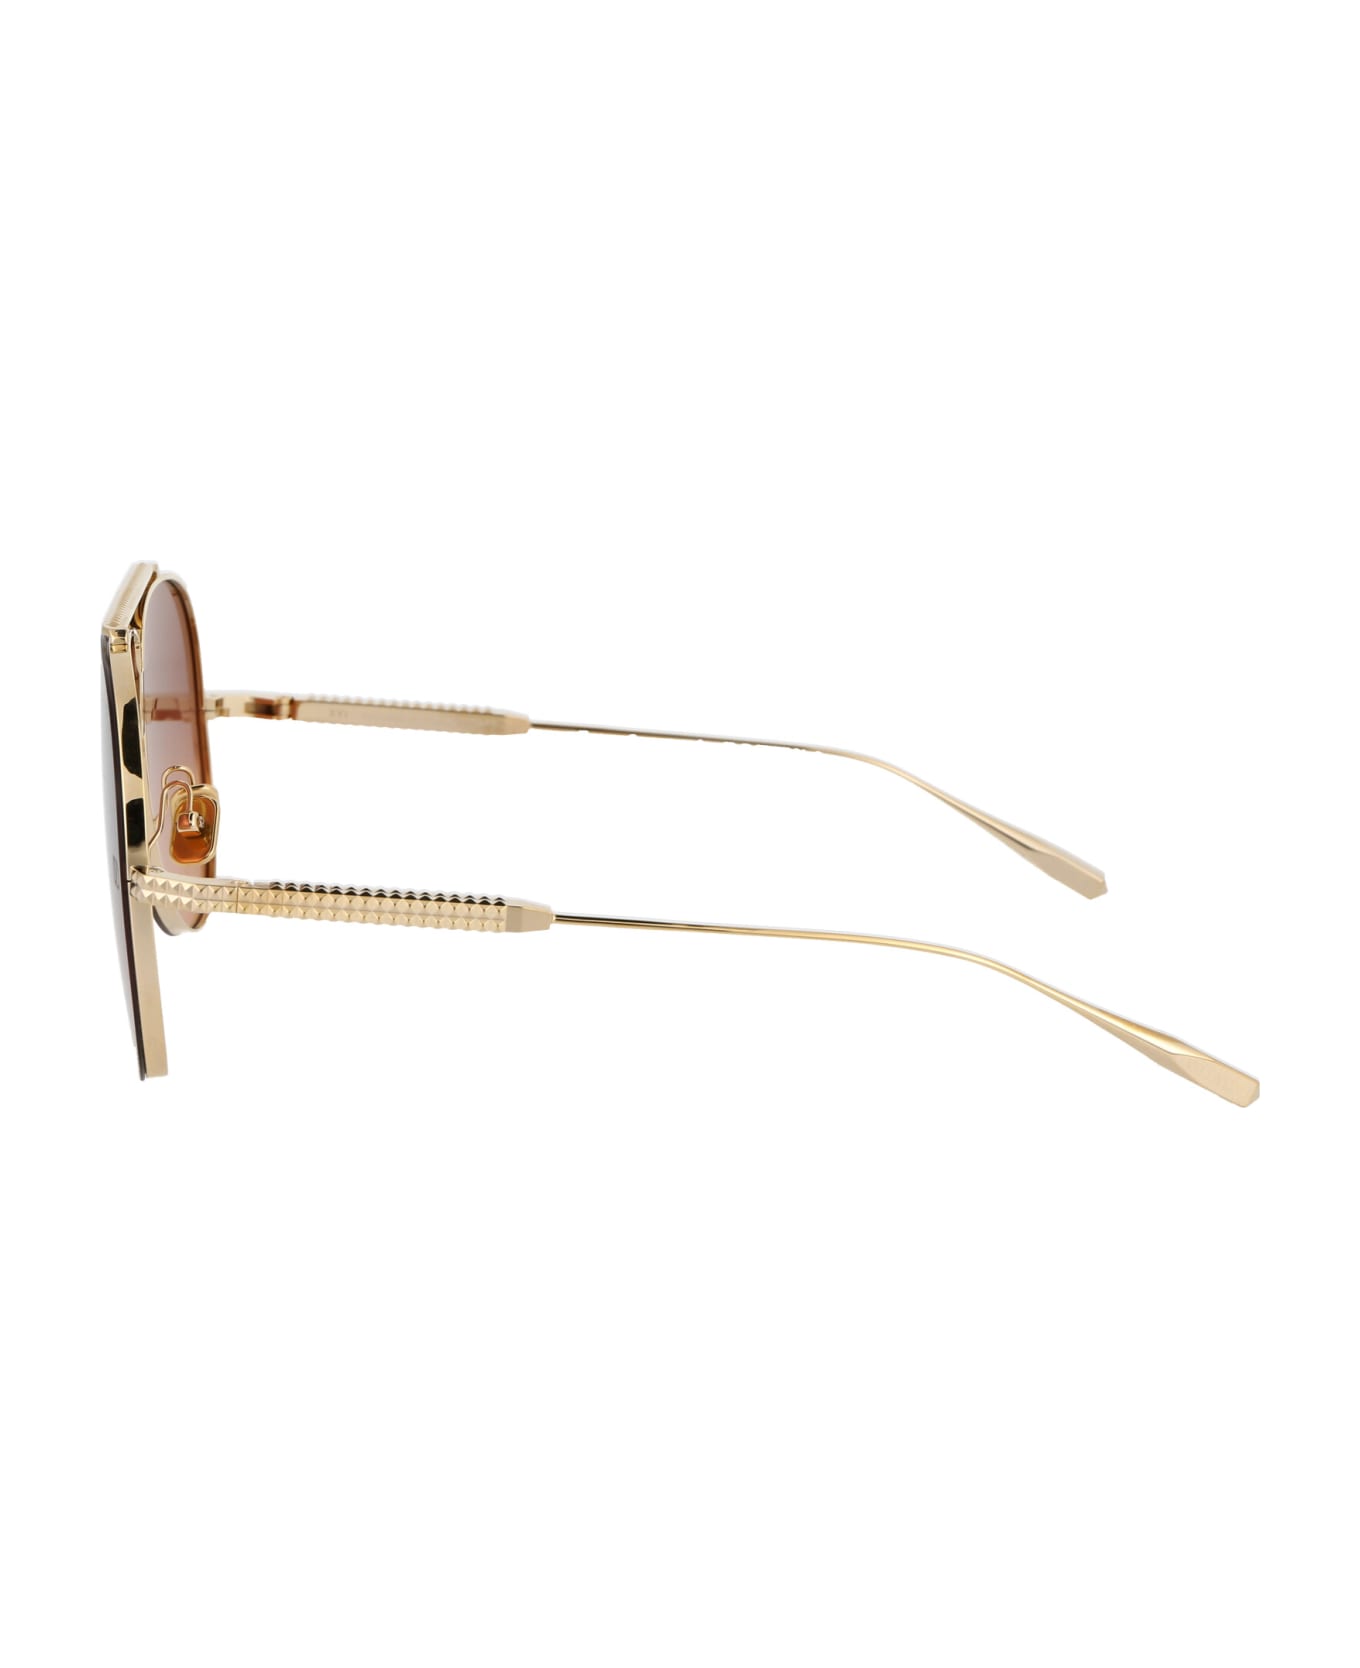 Valentino Eyewear Xvi Sunglasses - LIGHT GOLD W/ VIOLET TO ORANGE